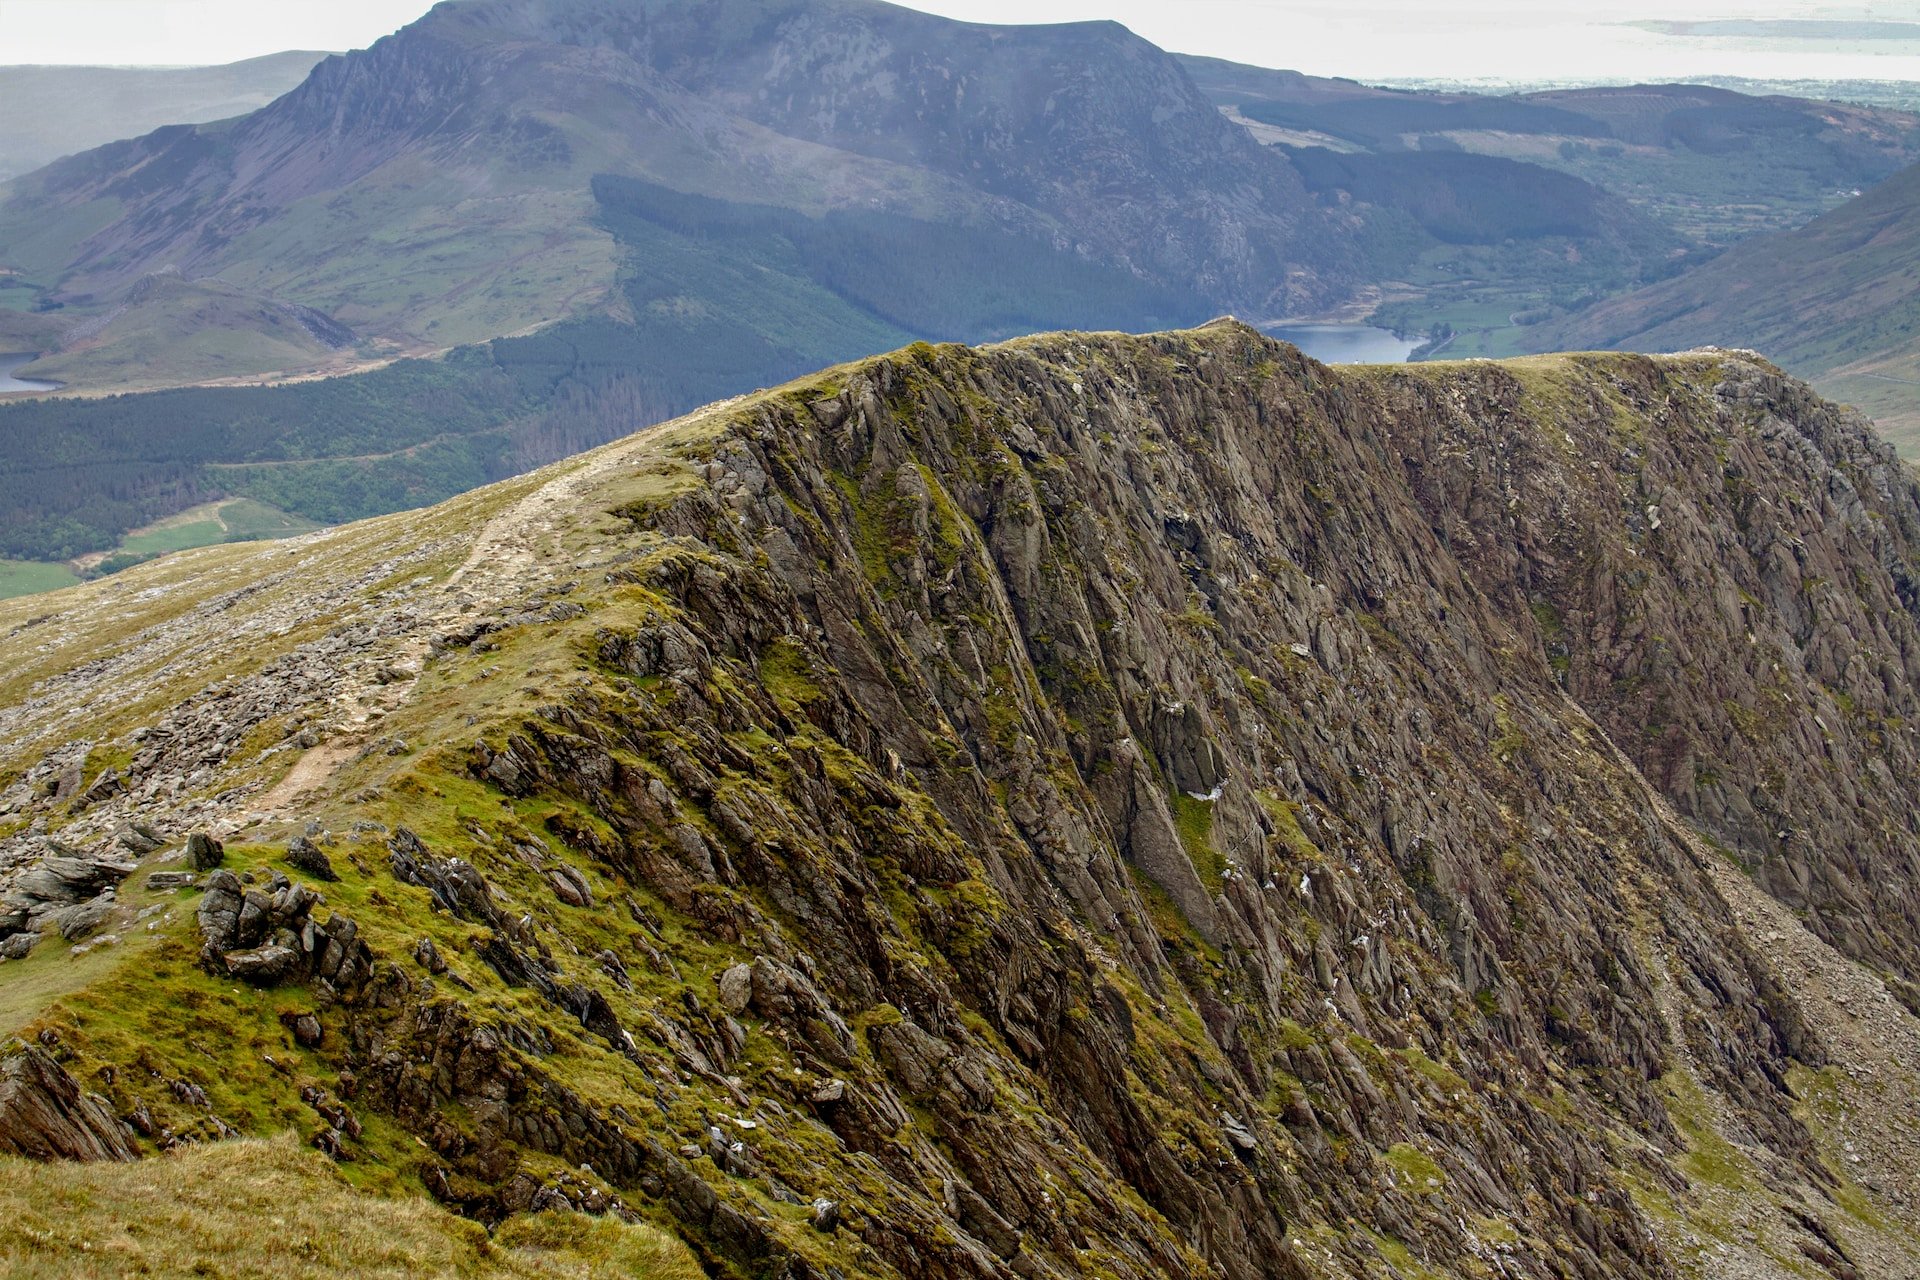 The peak of Mount Snowdon in Wales  (photo: Isa Macouzet)